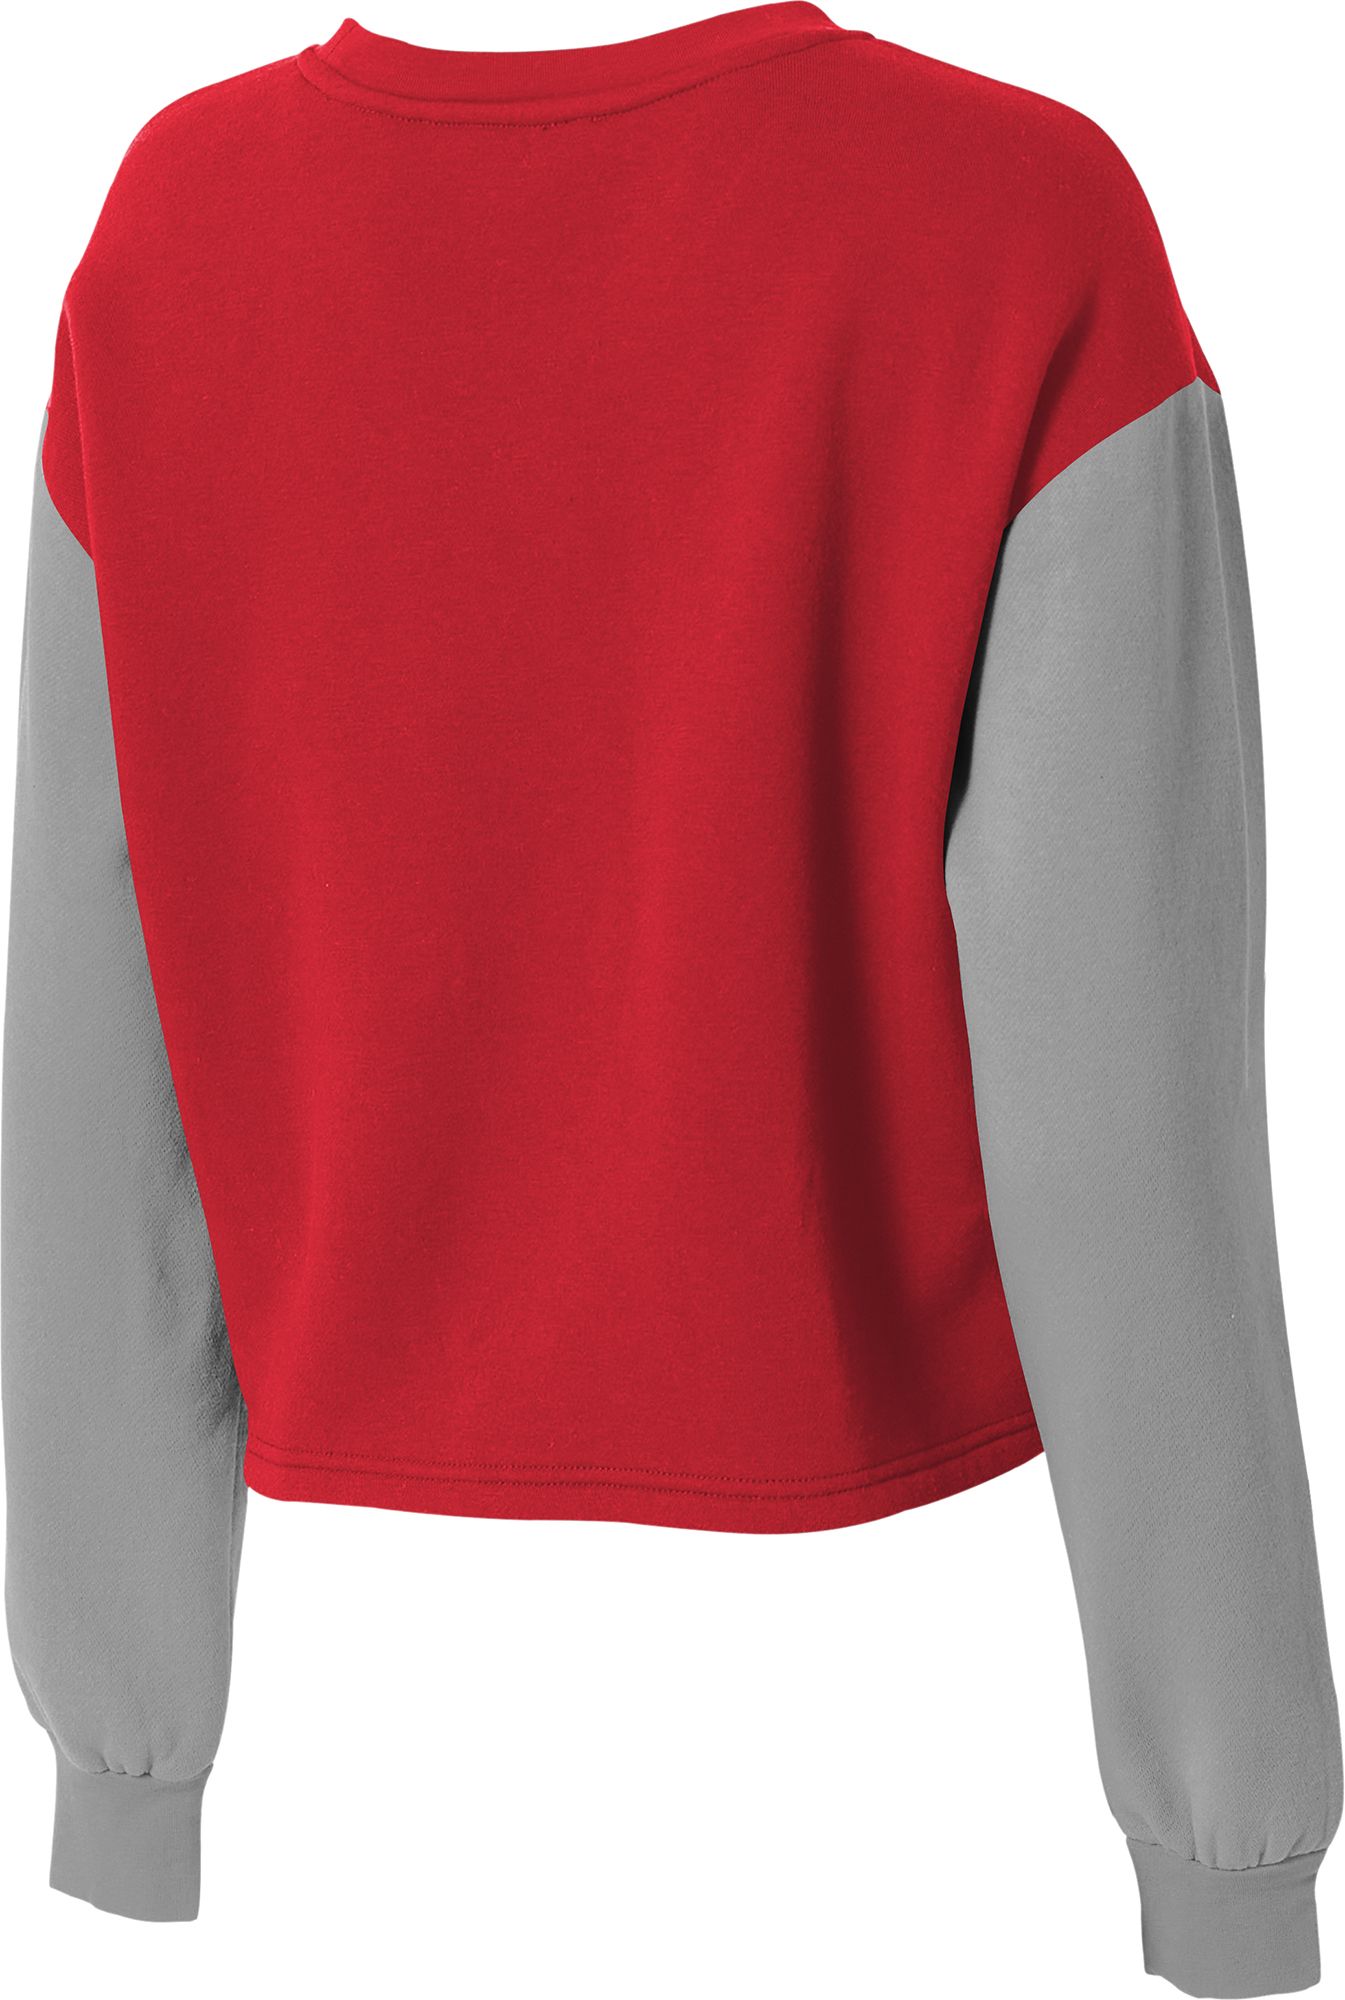 WEAR by Erin Andrews Women's Ohio State Buckeyes Scarlet Colorblock Crew Neck Sweatshirt